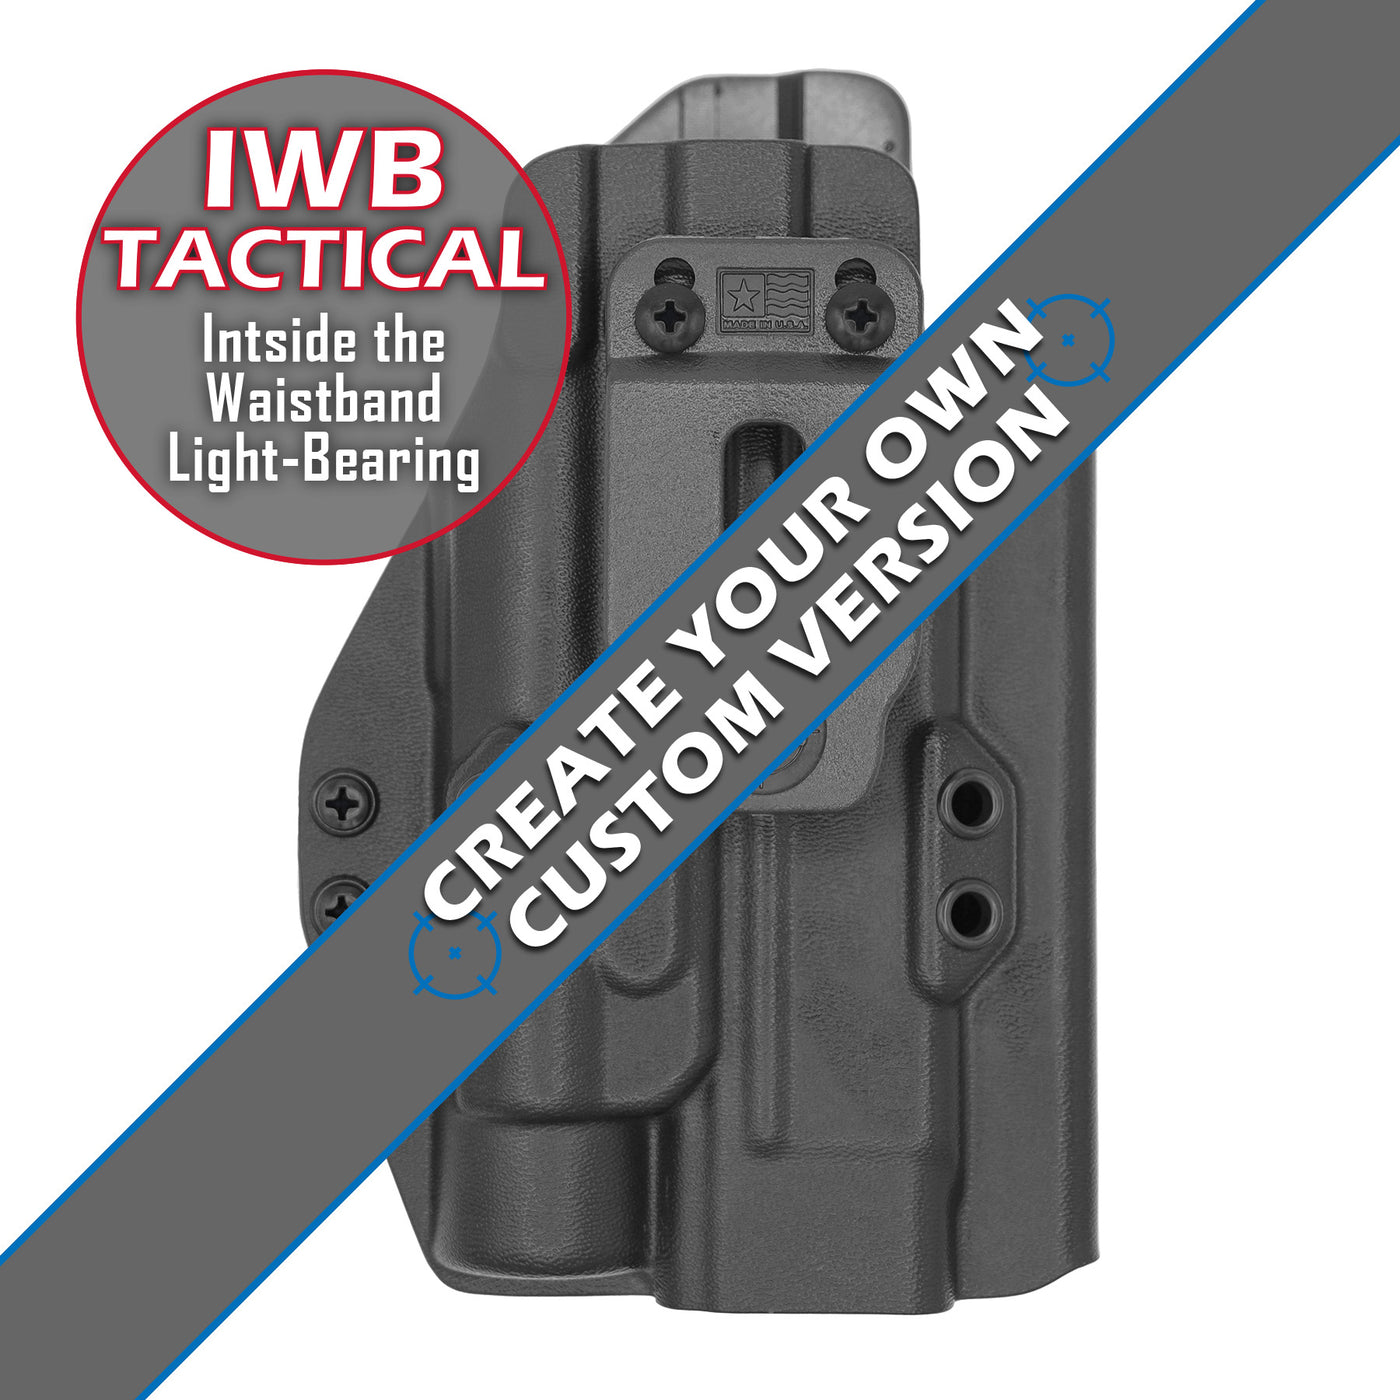 C&G Holsters custom IWB tactical holster